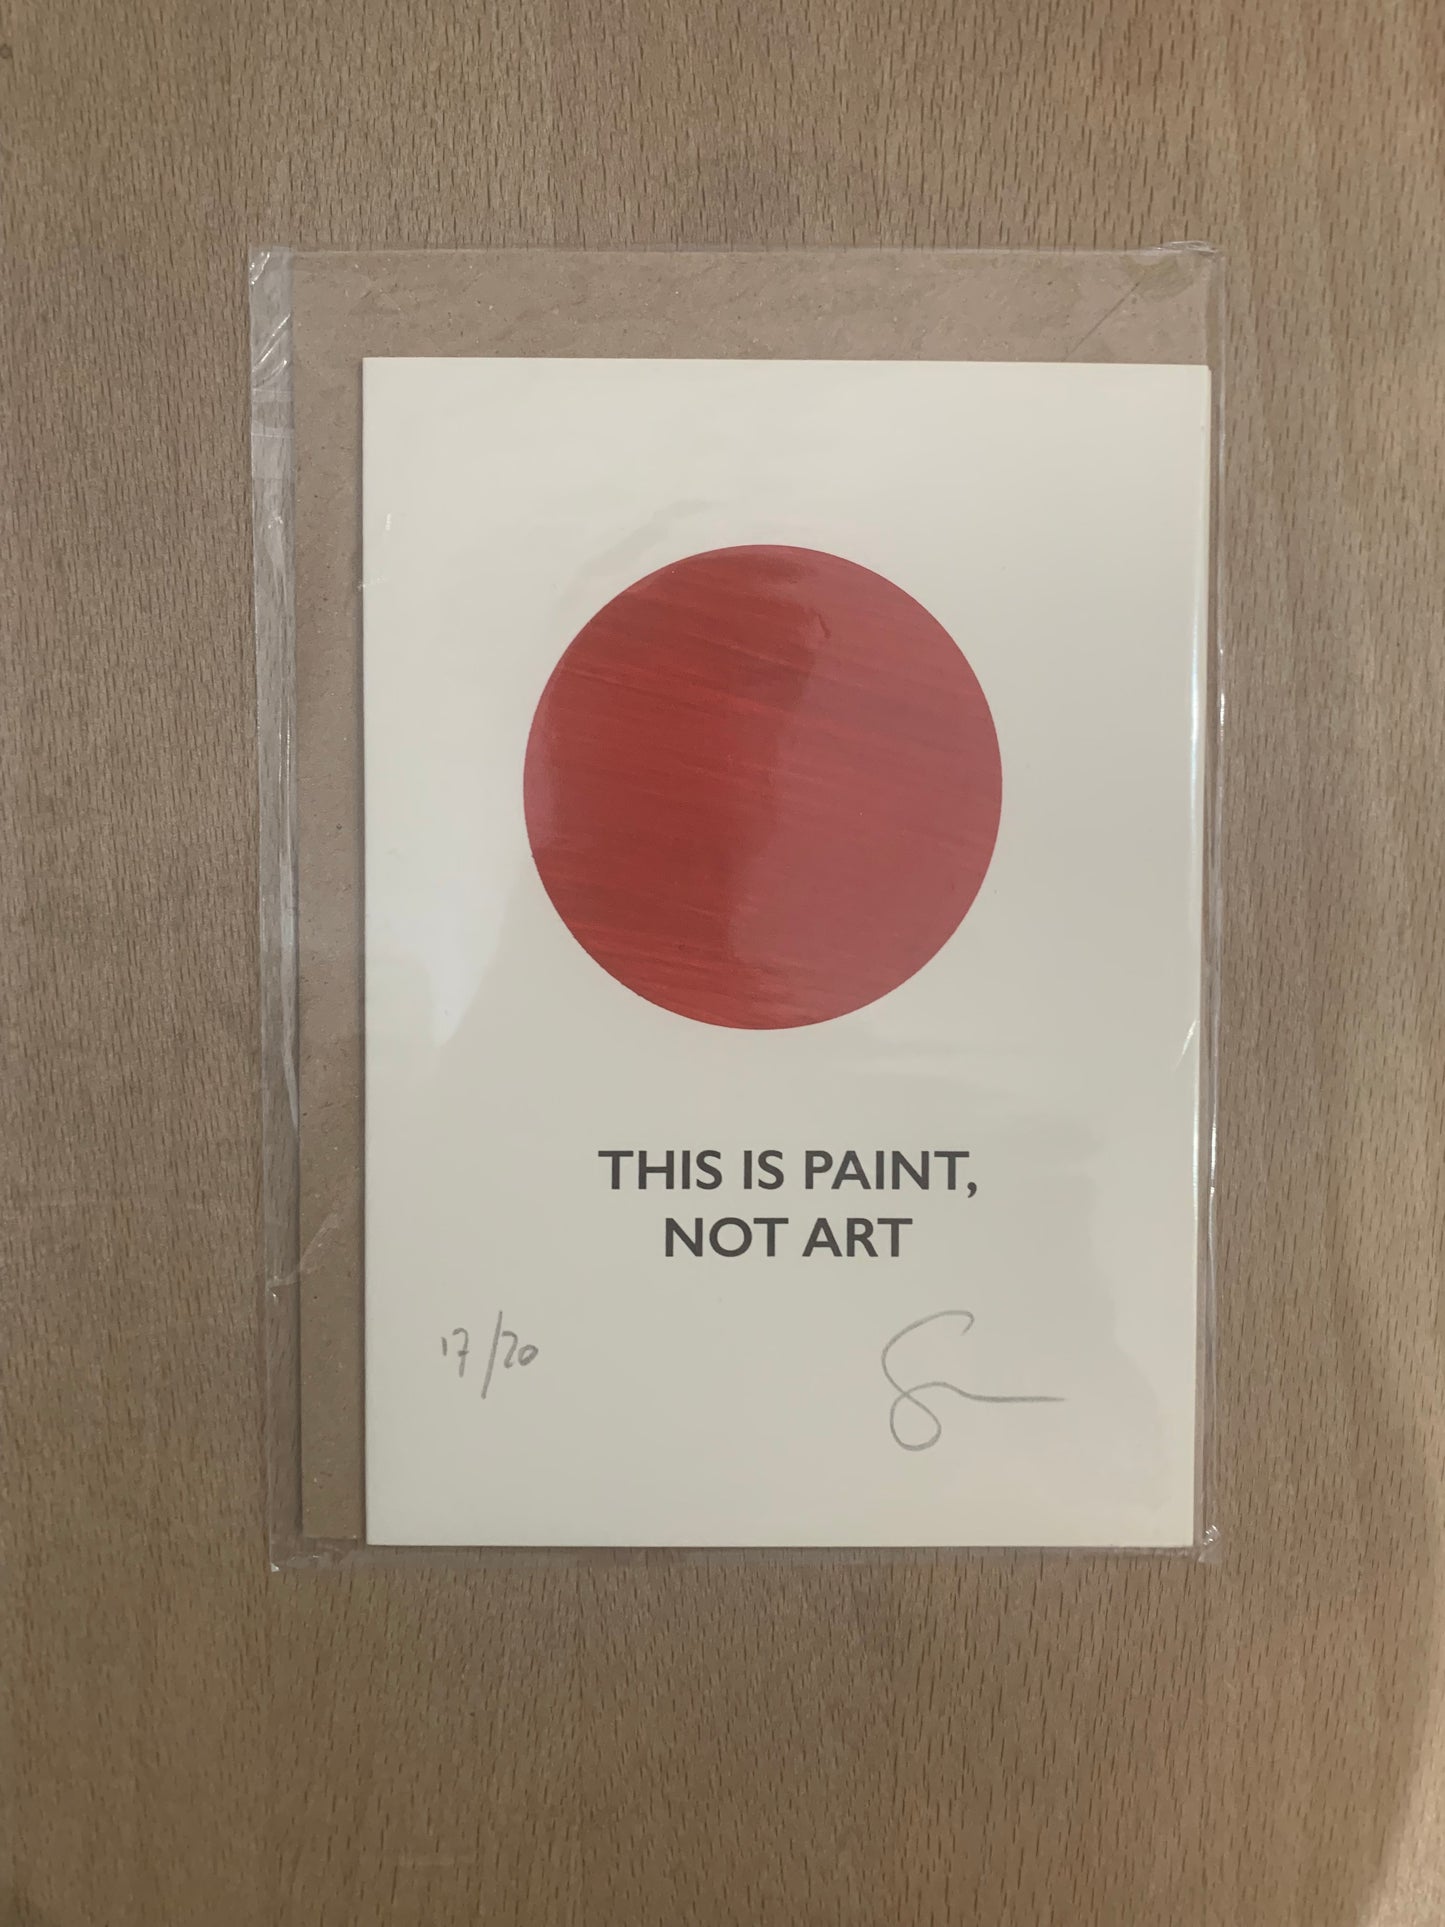 CMPH "This is paint, not art"